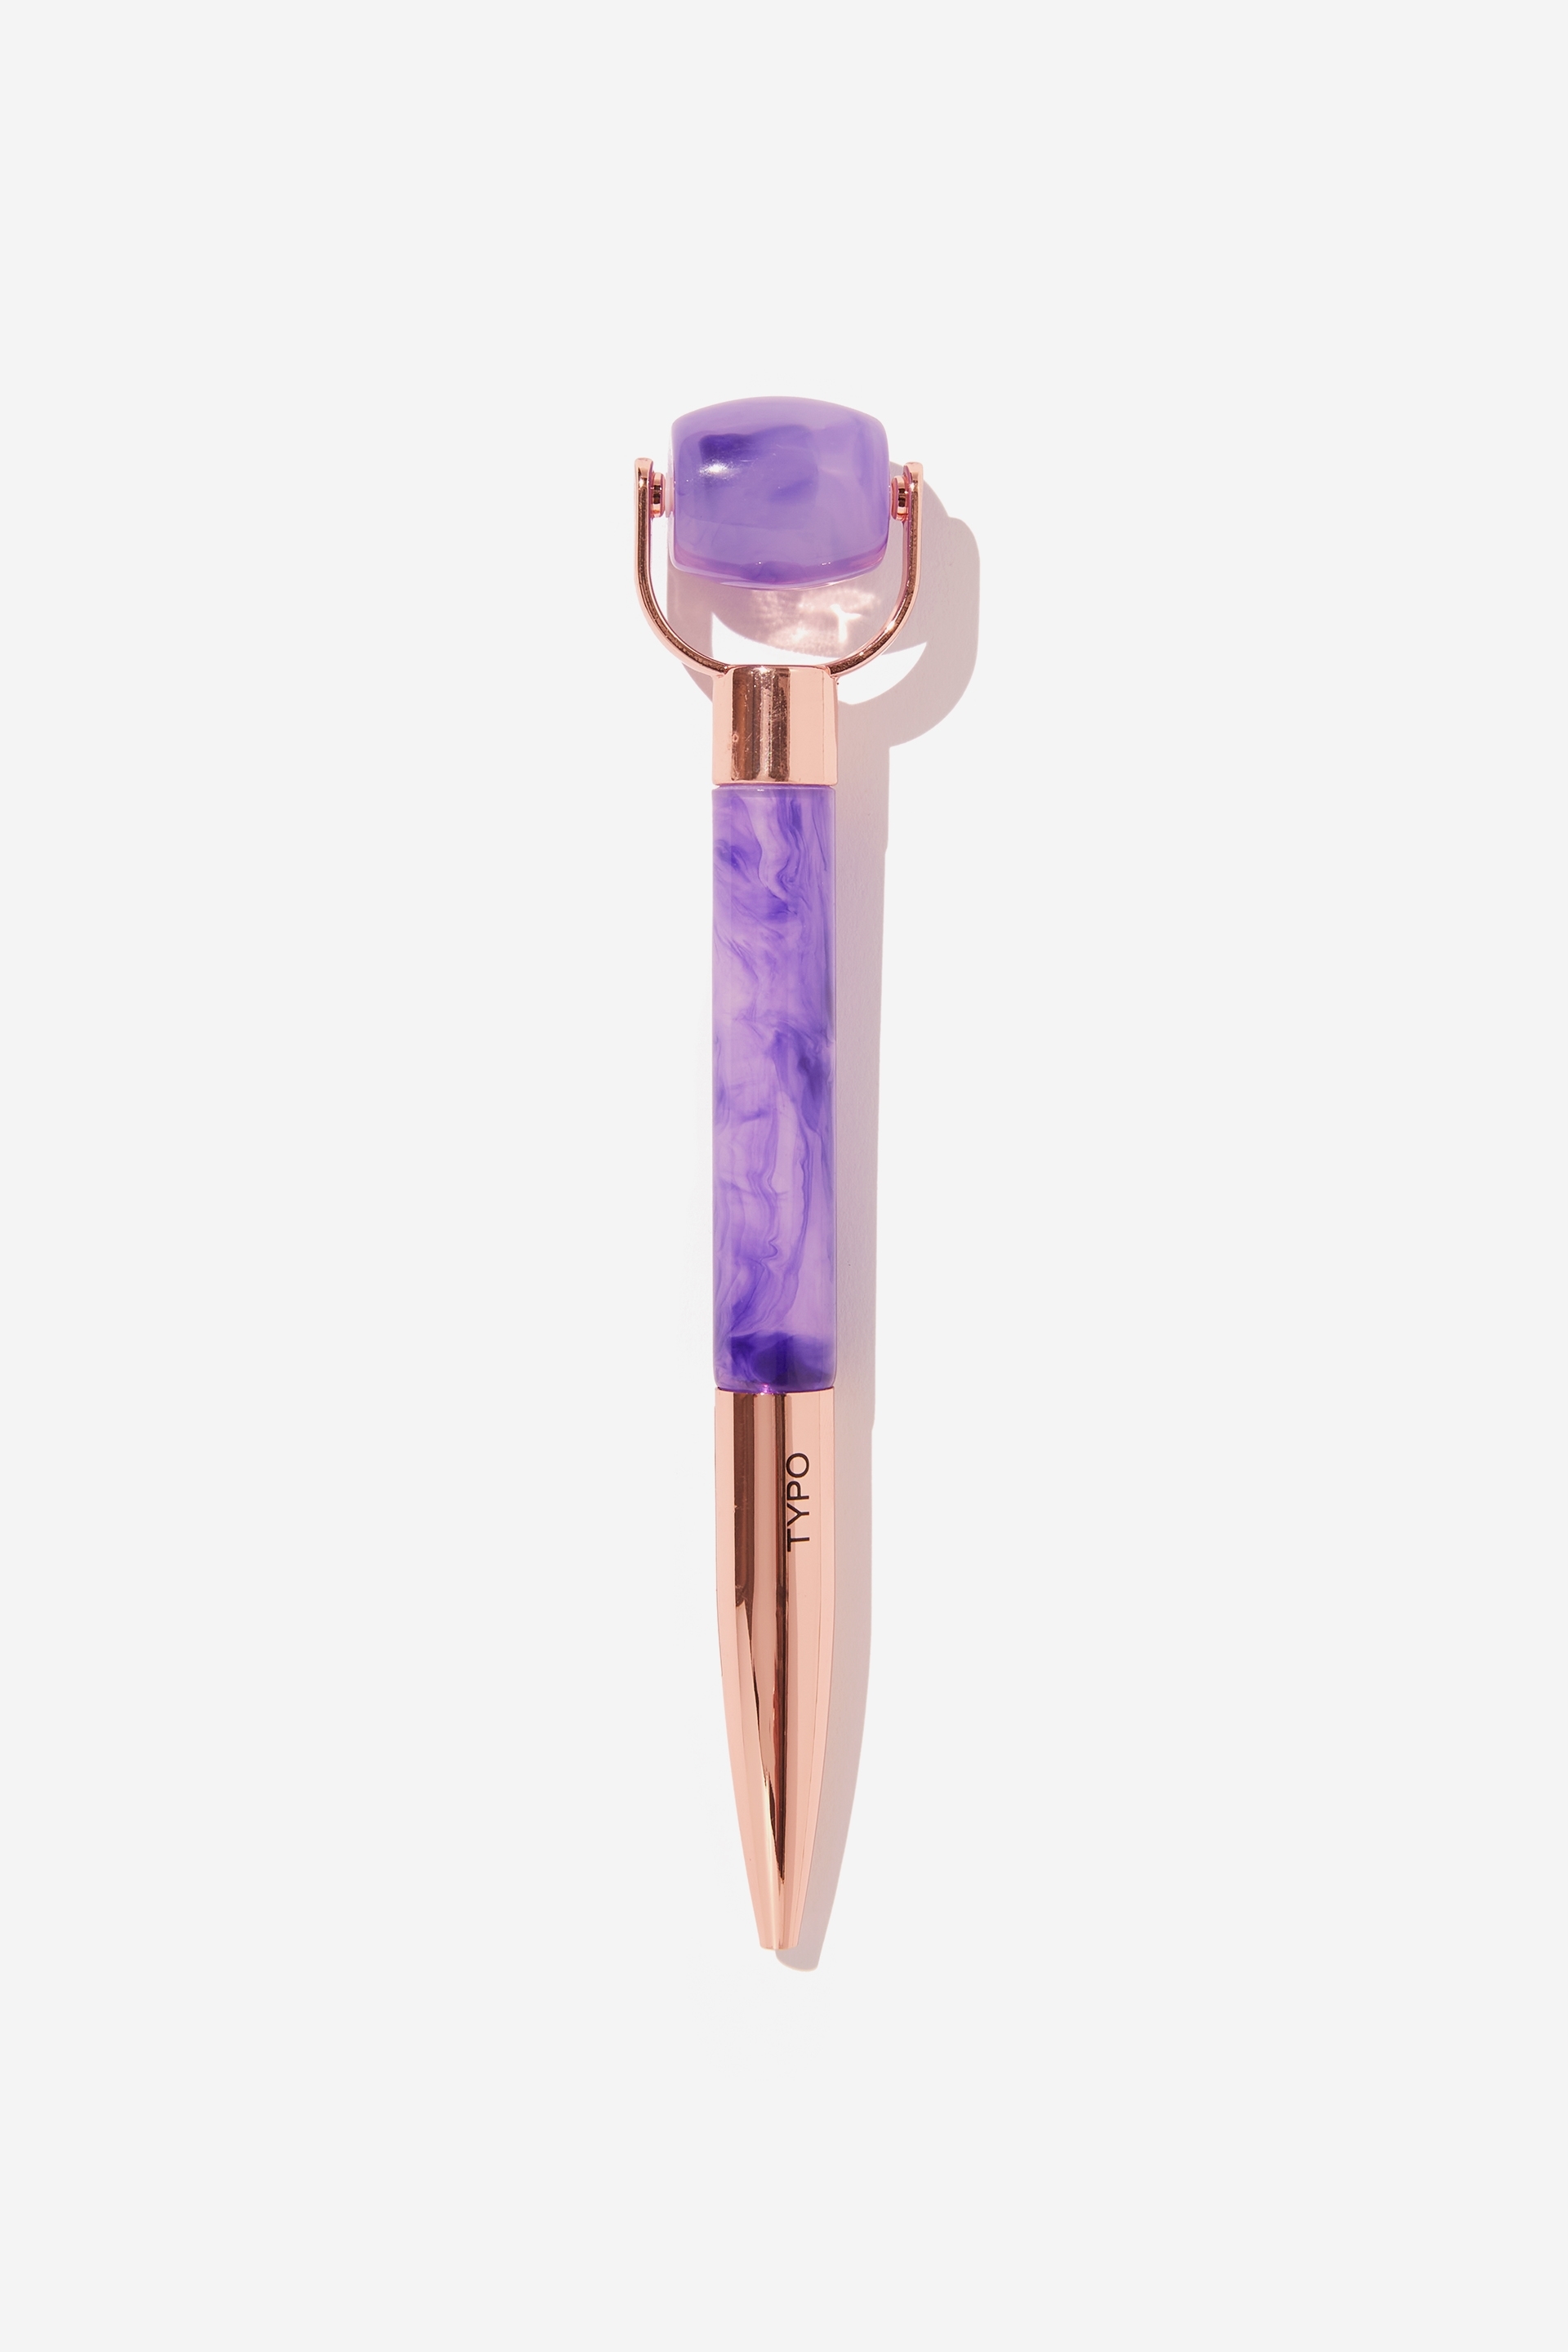 Typo - Jasmine Roller Pen - Rose gold and purple